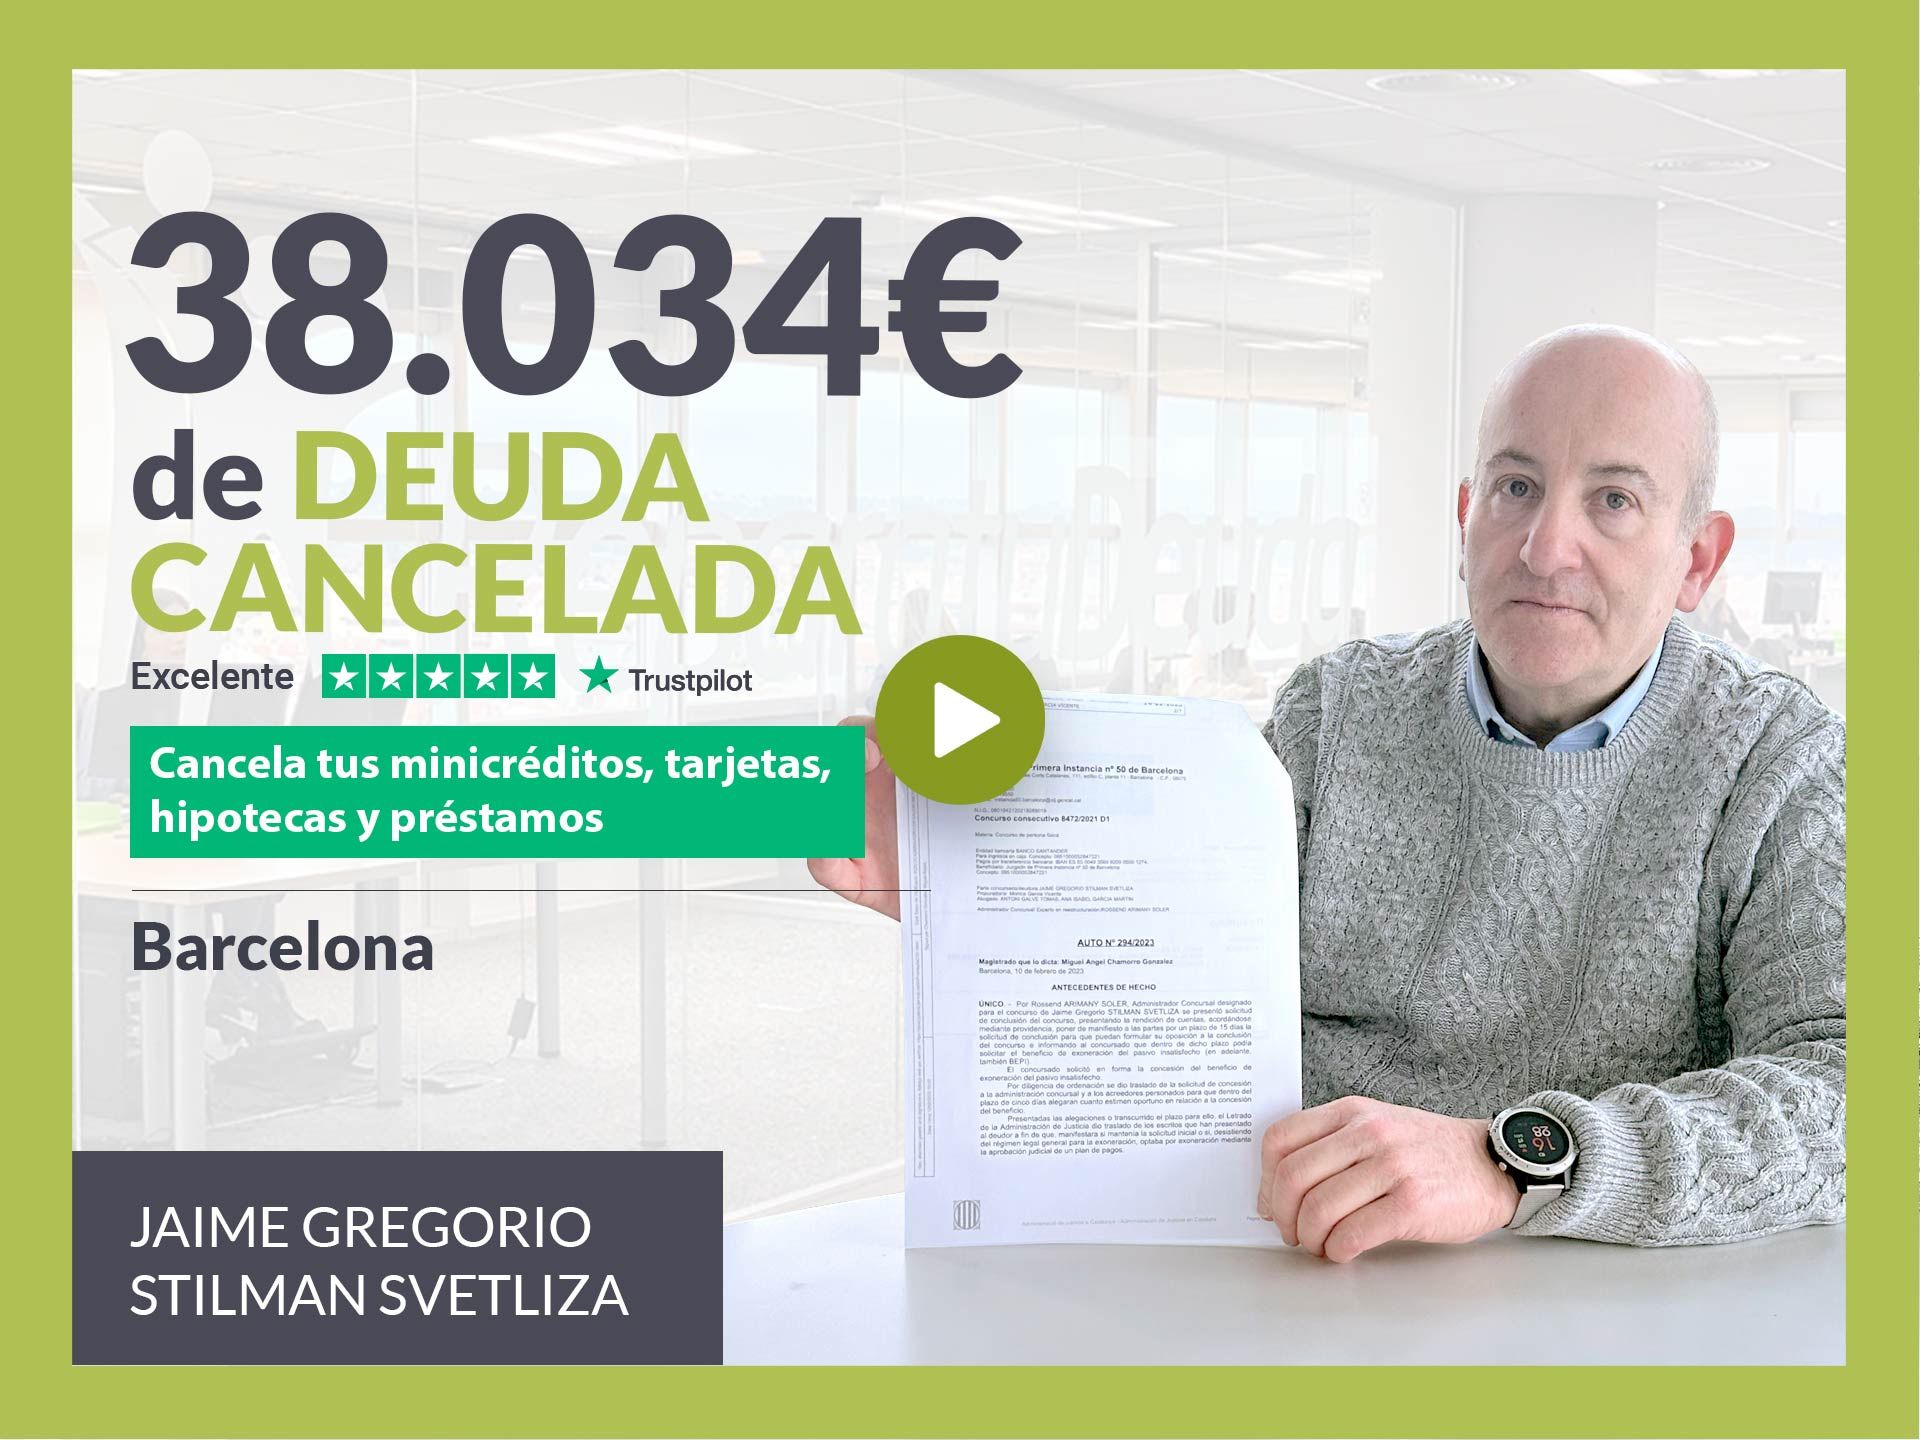 Fotografia Repara tu Deuda Abogados cancela 38.034 € en Barcelona